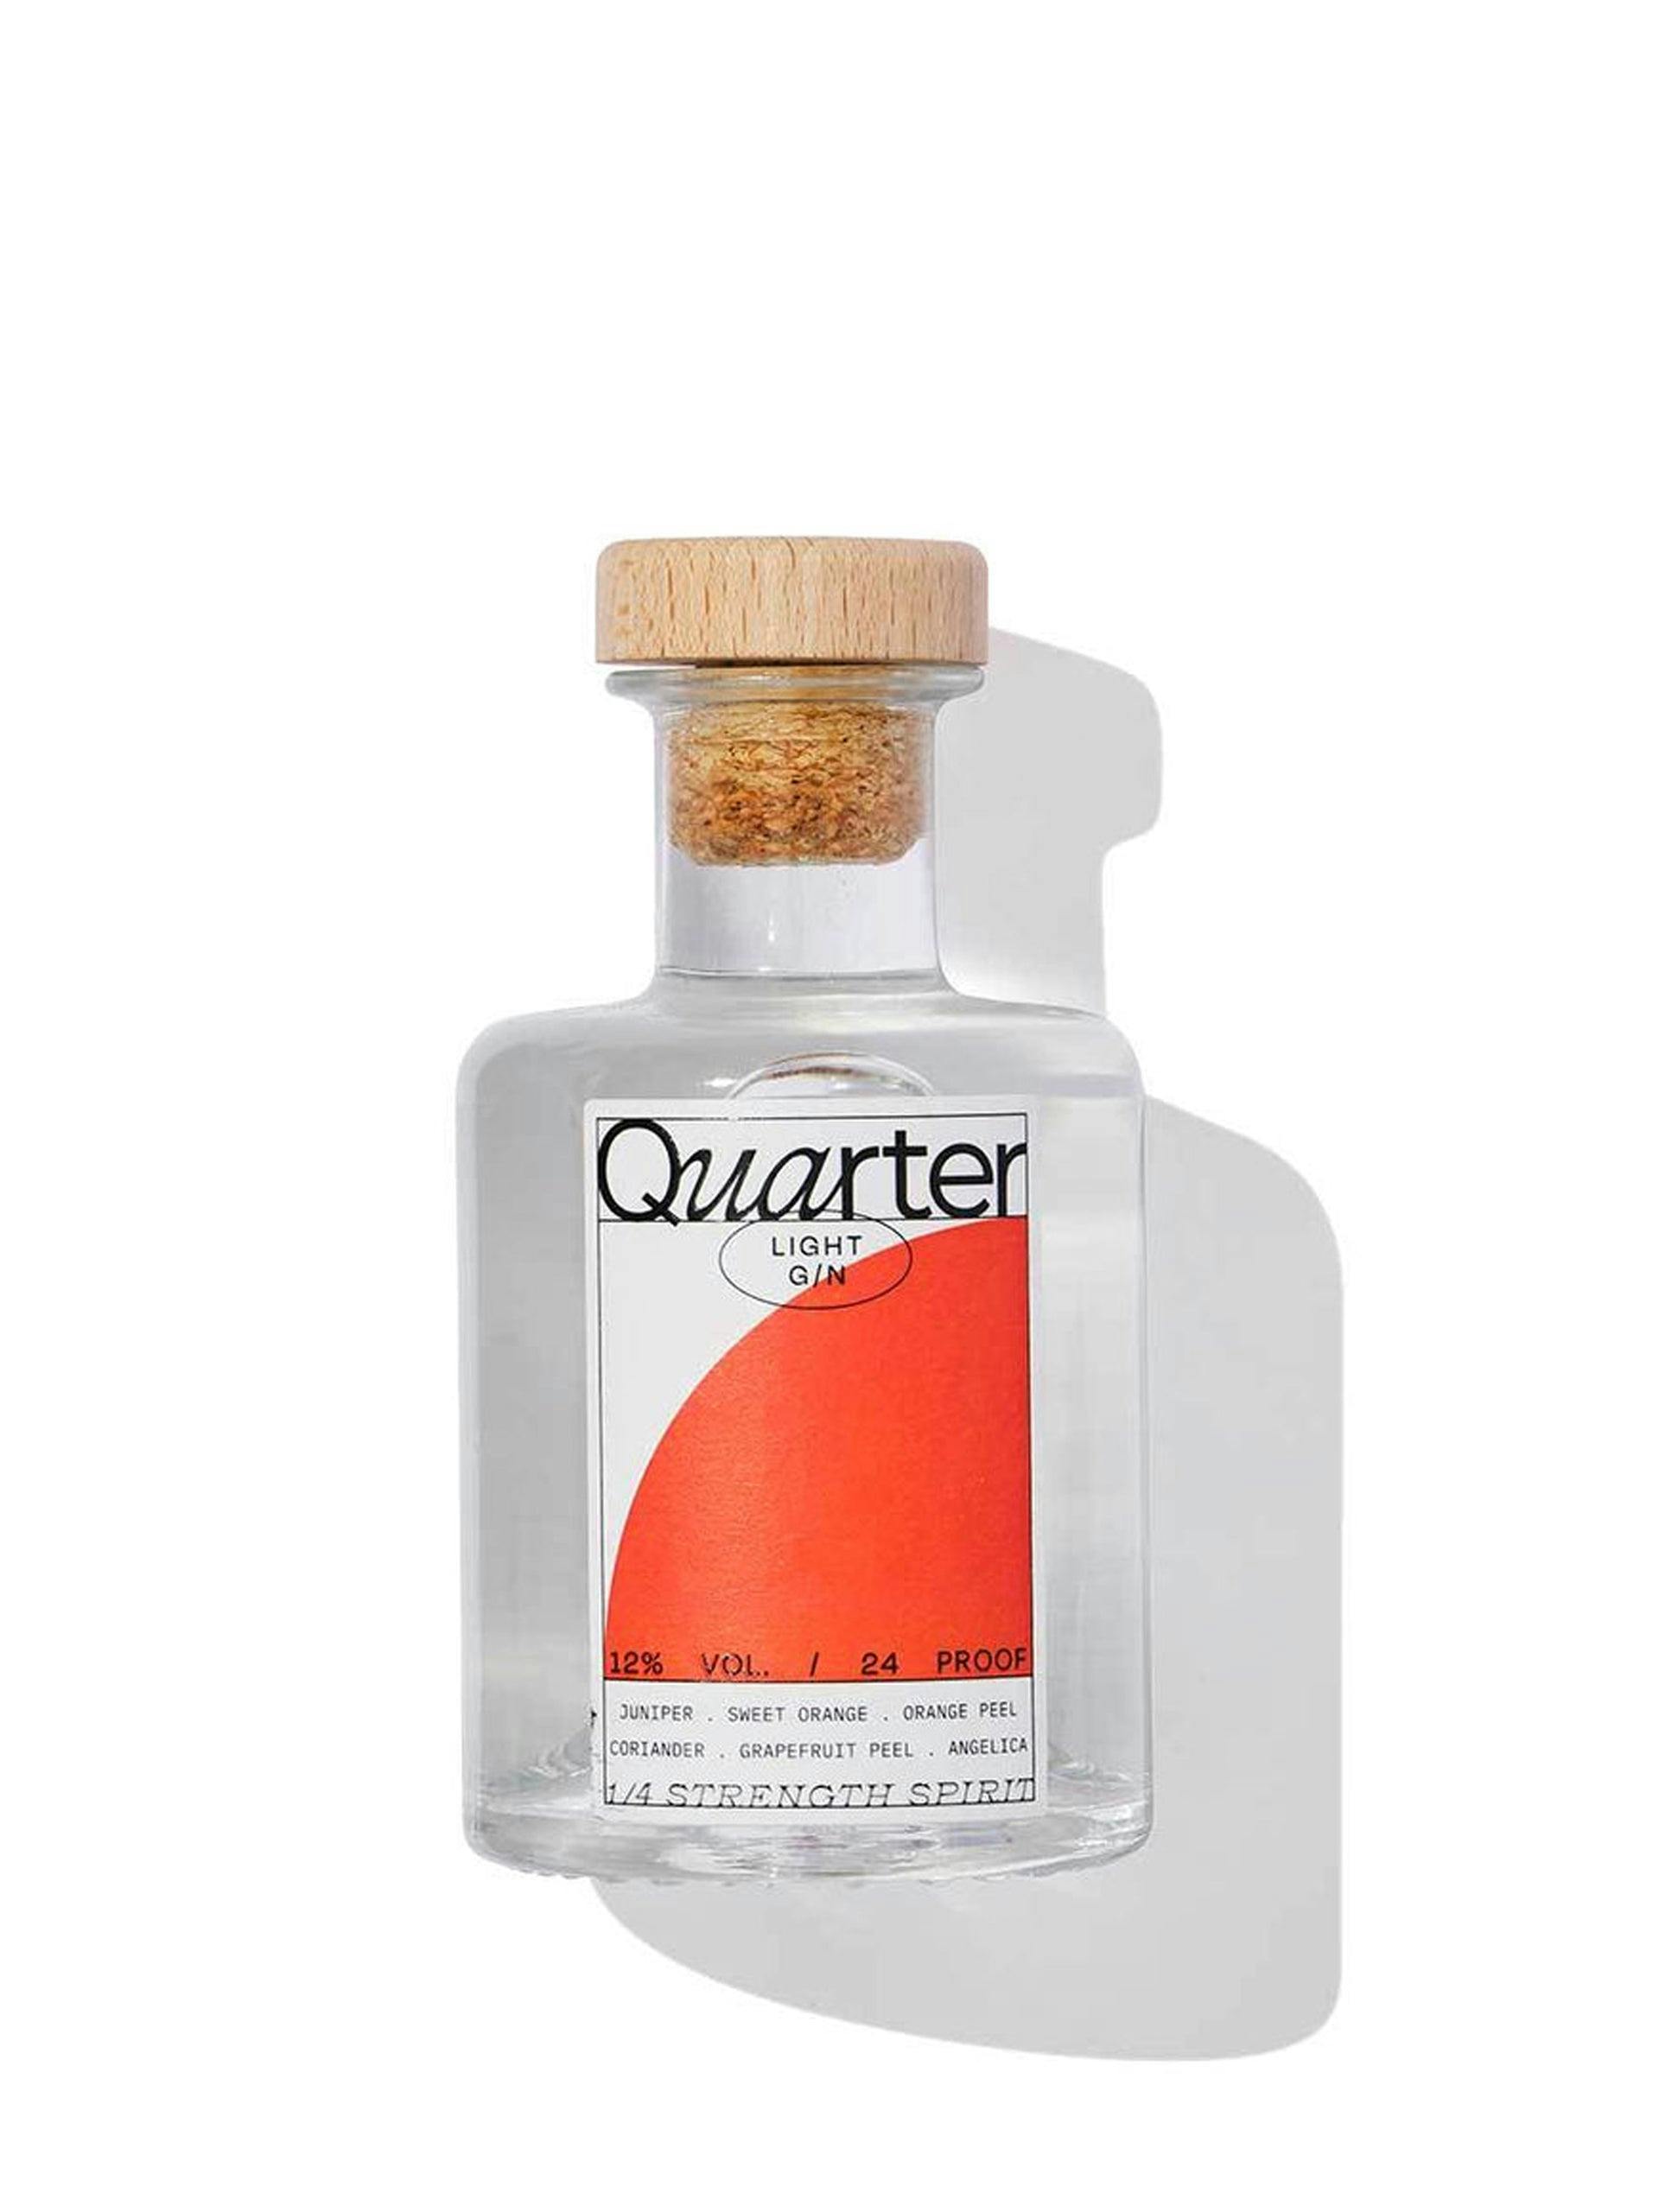 Quarter gin